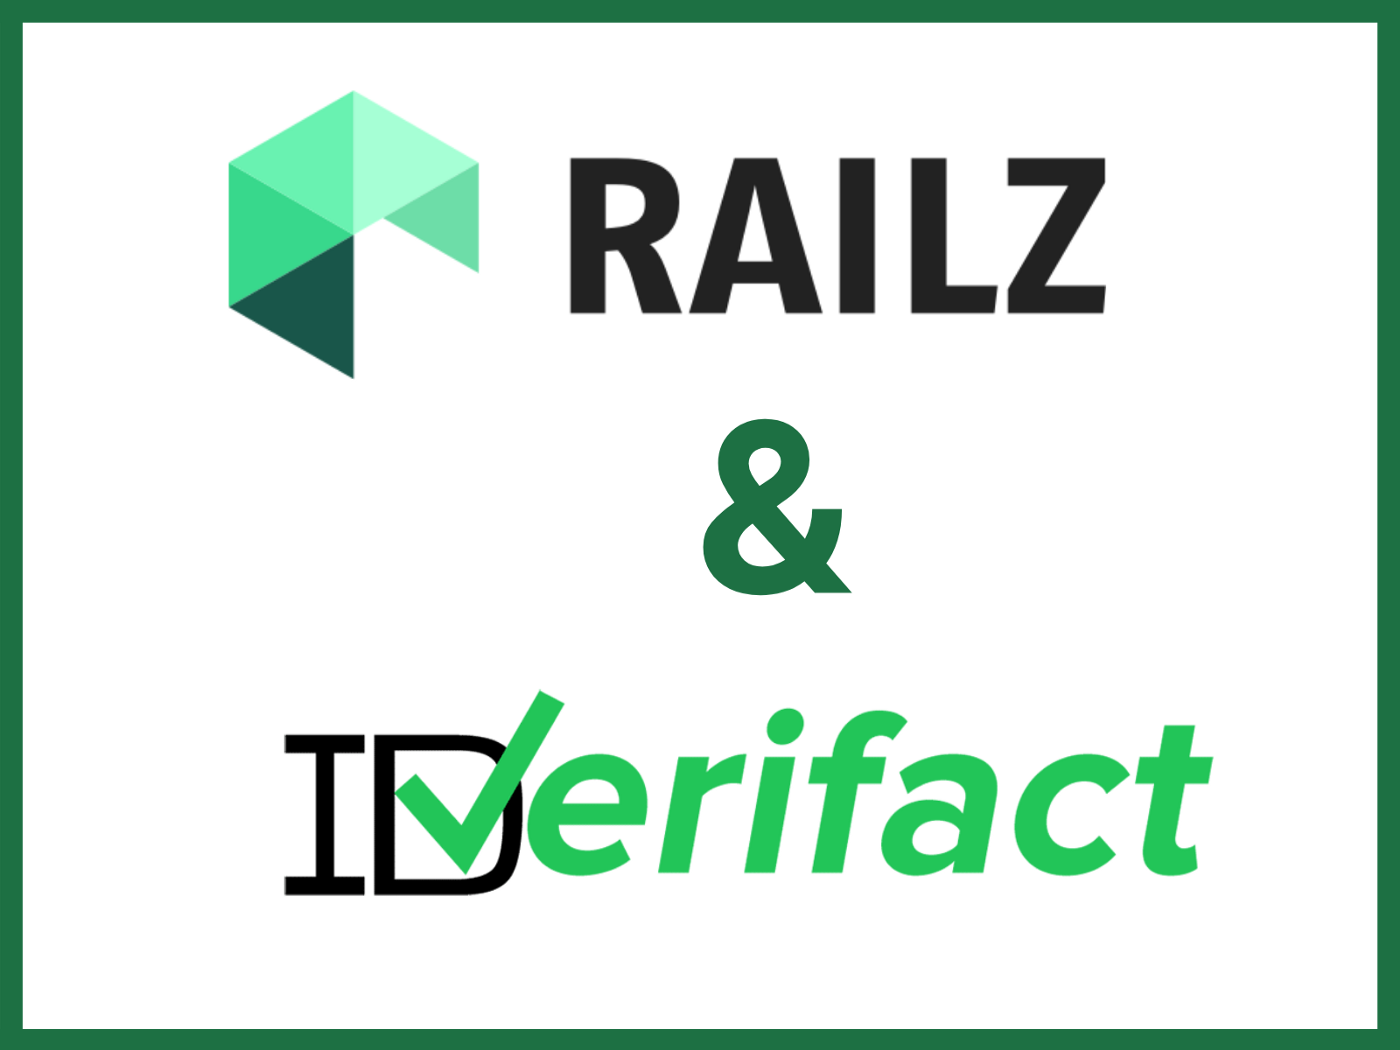 railz prodigy id verifact partnership